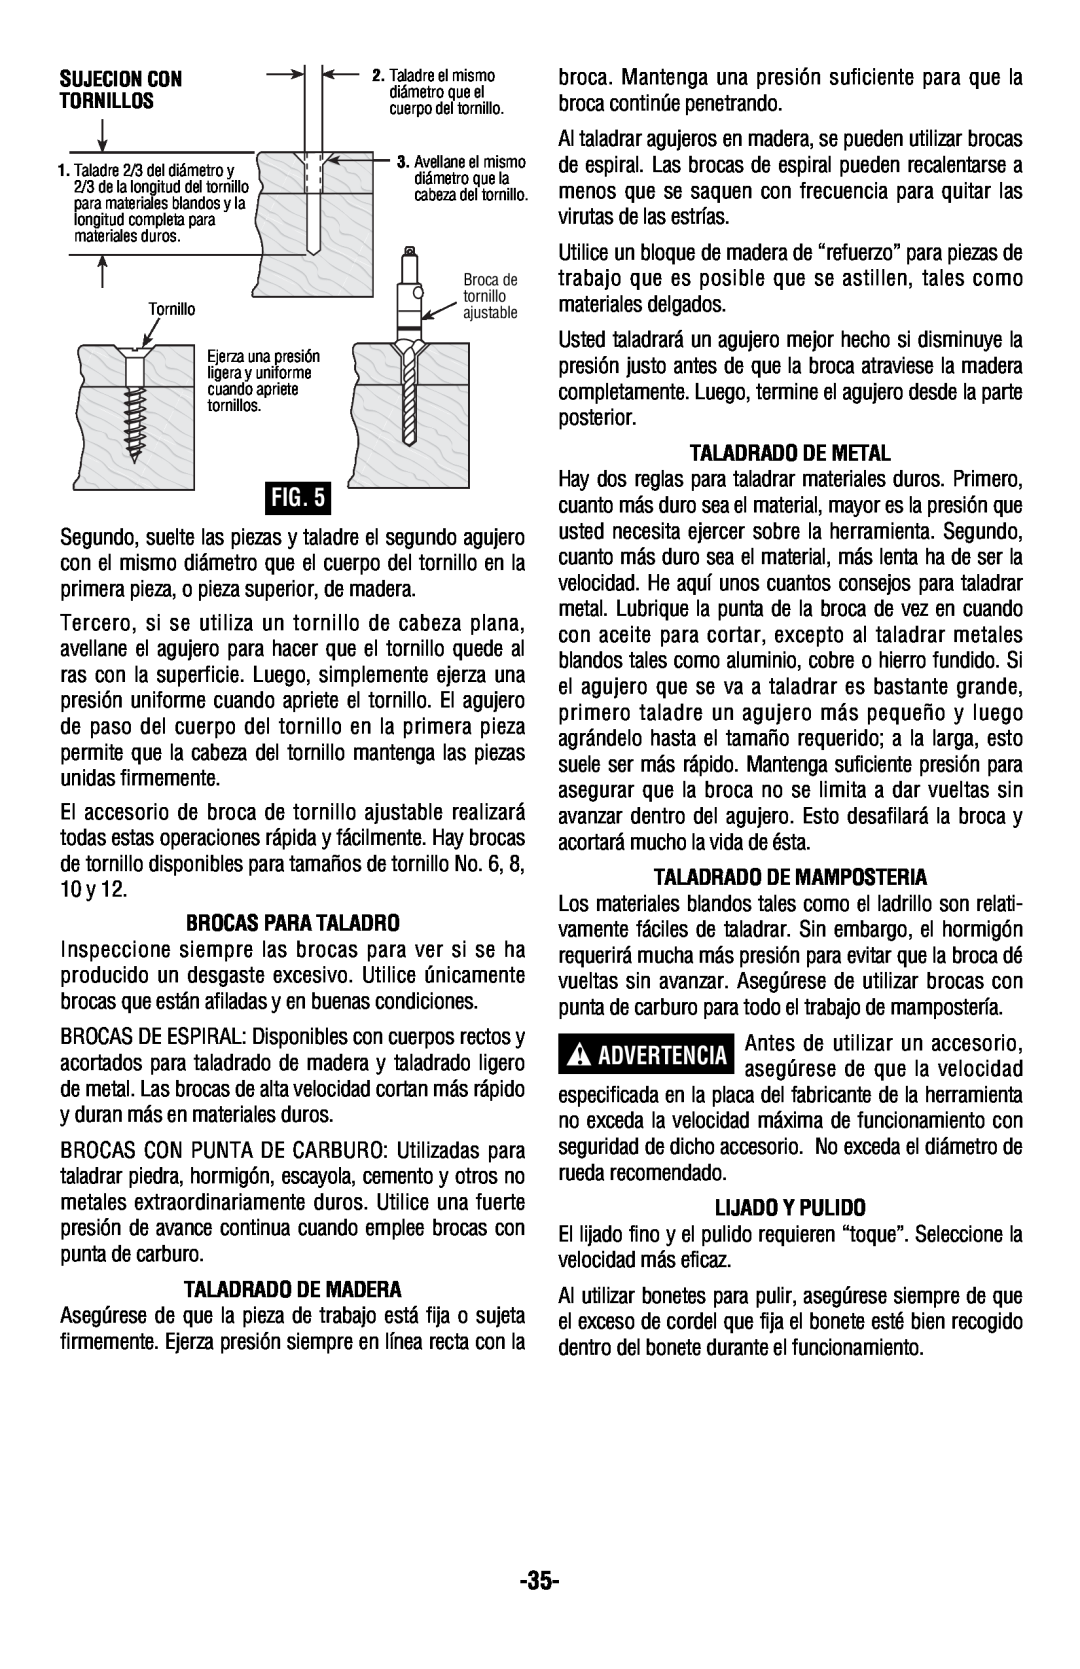 Bosch Power Tools 13624, 13614 manual Brocas Para Taladro, Taladrado De Madera, Taladrado De Metal, Taladrado De Mamposteria 